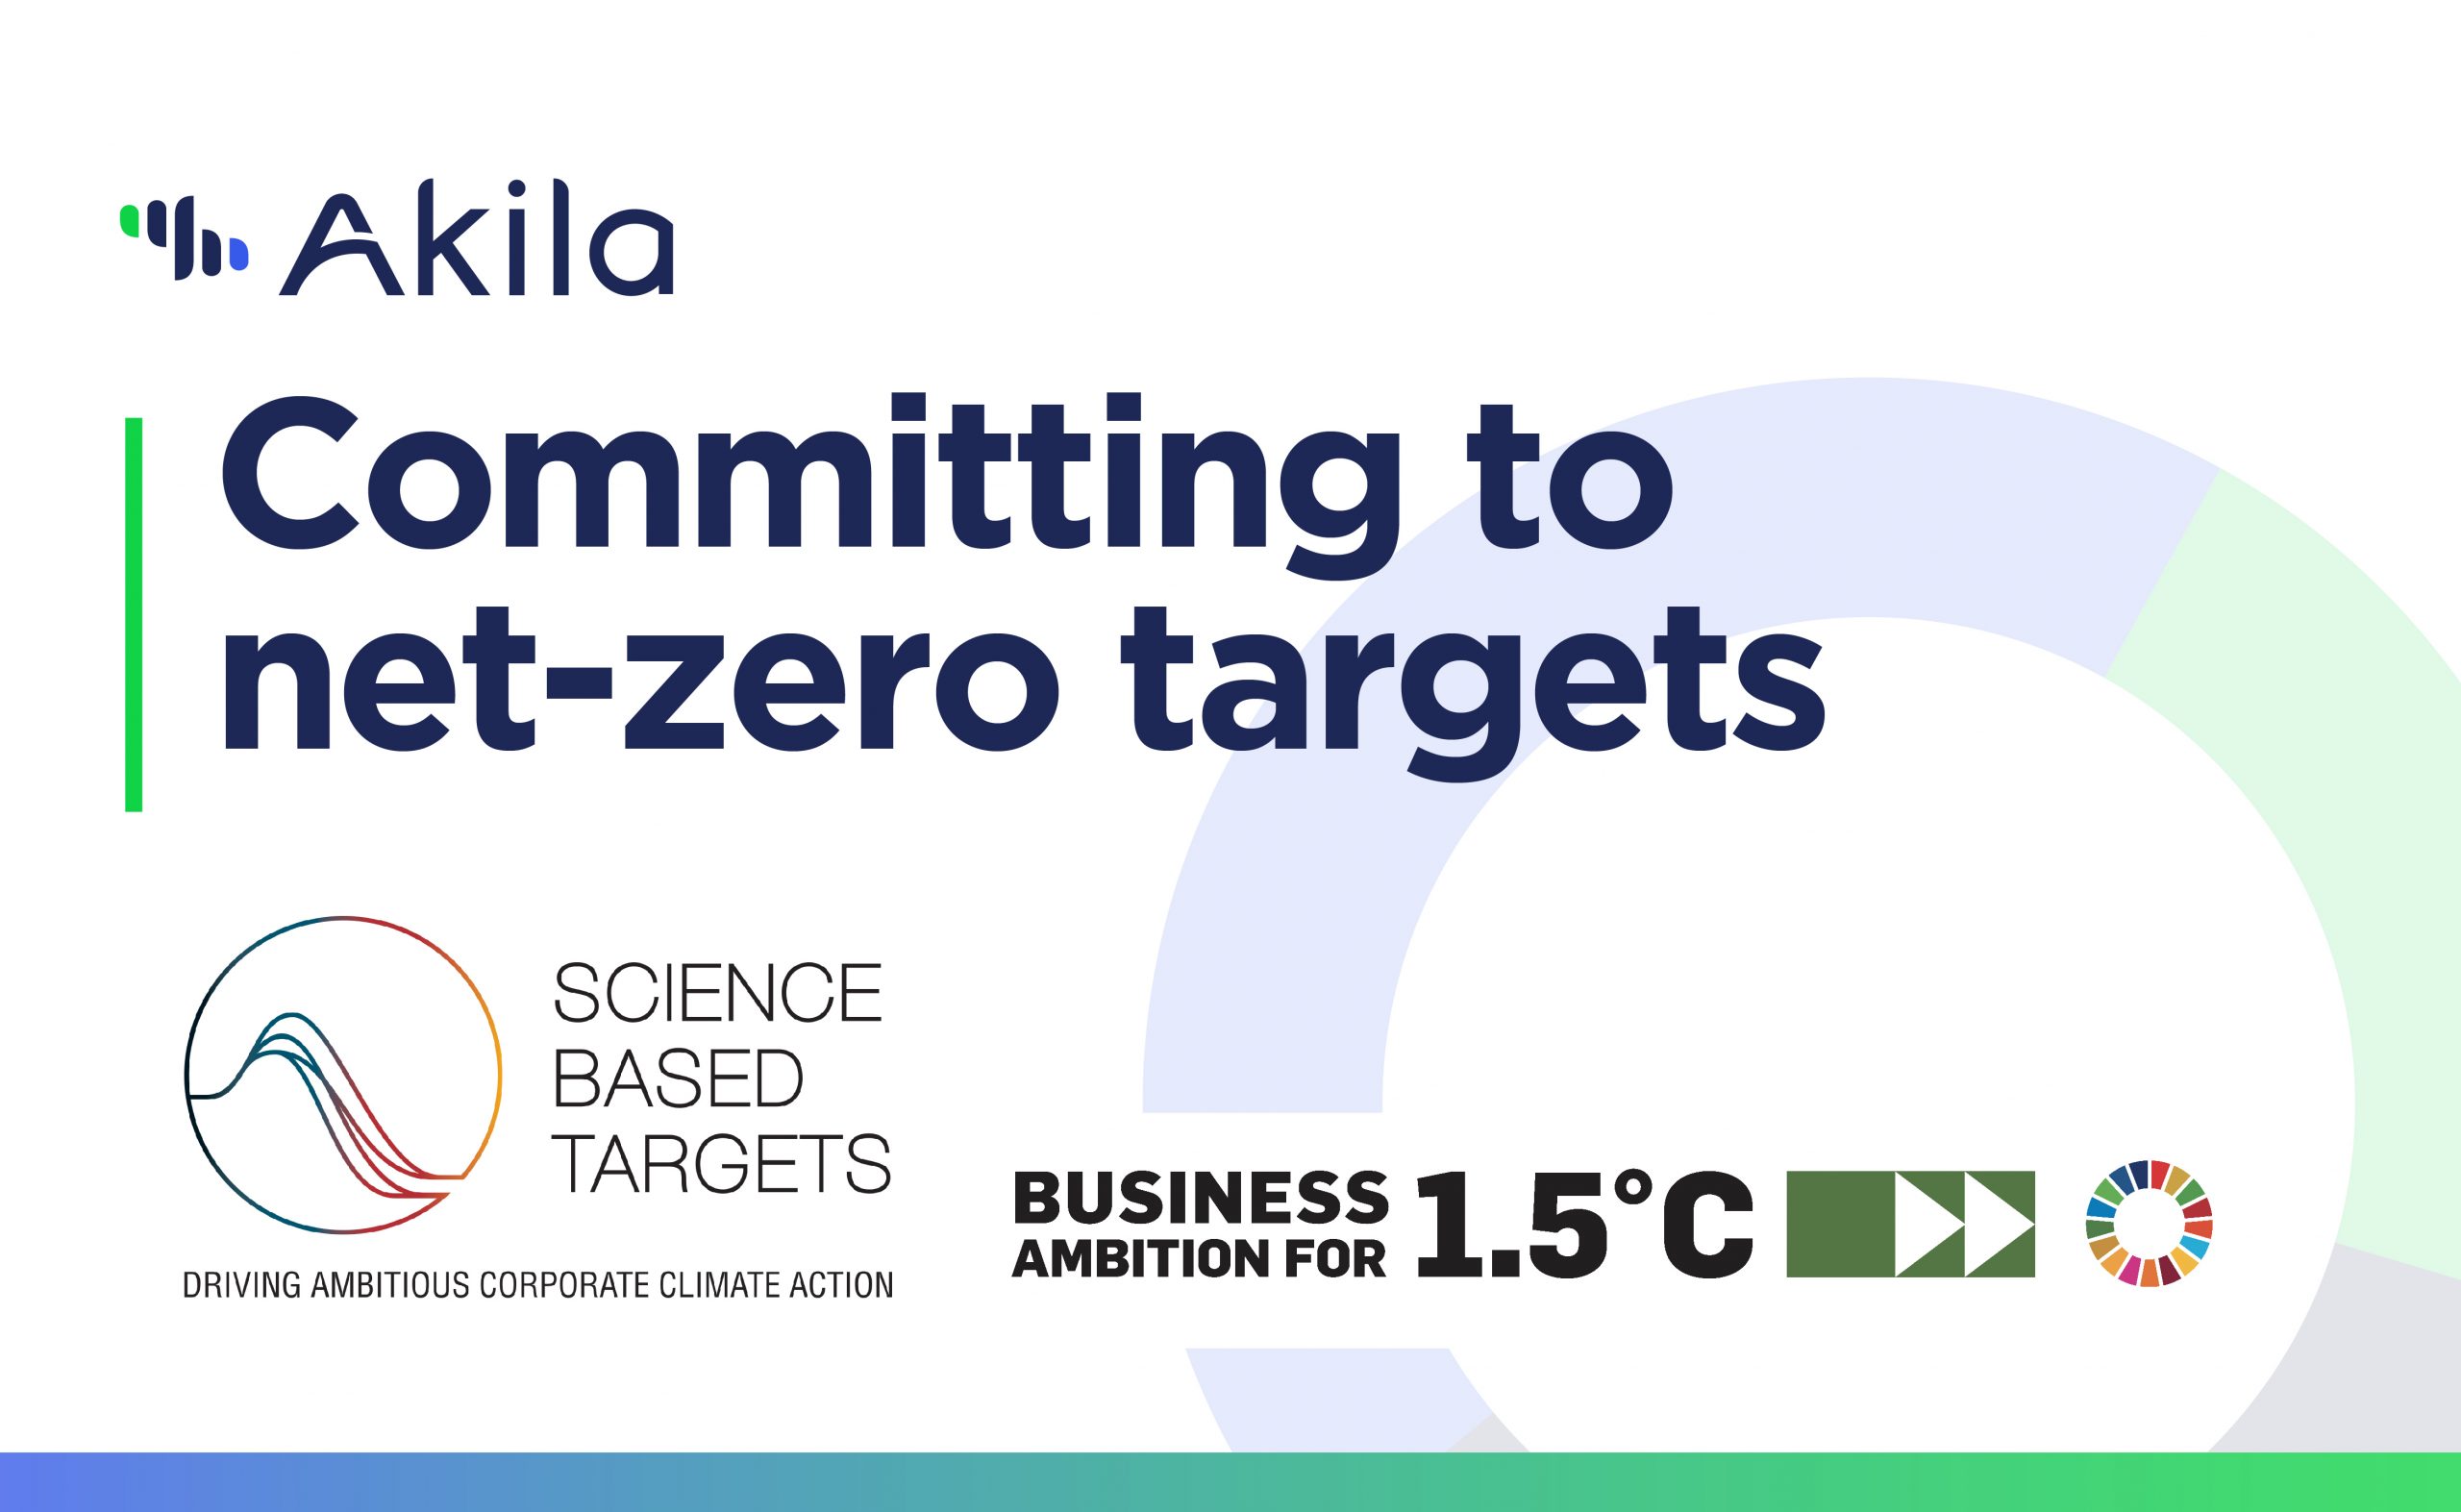 Akila 는 SBTi (Science Based Targets initiative- 과학기반감축목표)의 넷제로표준을 준수하고, 비즈니스 앰비션 포 1.5°C (Business Ambition for 1.5°C)에 합류하다